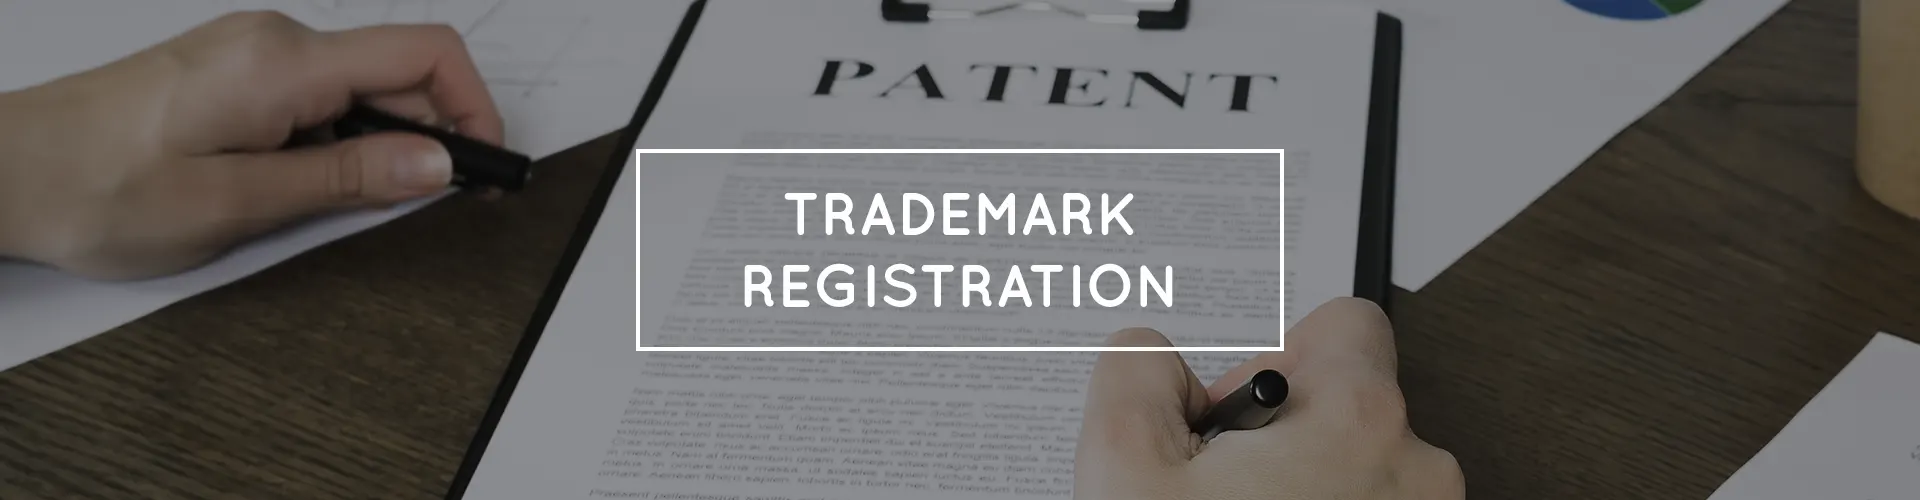 banner trademark registration